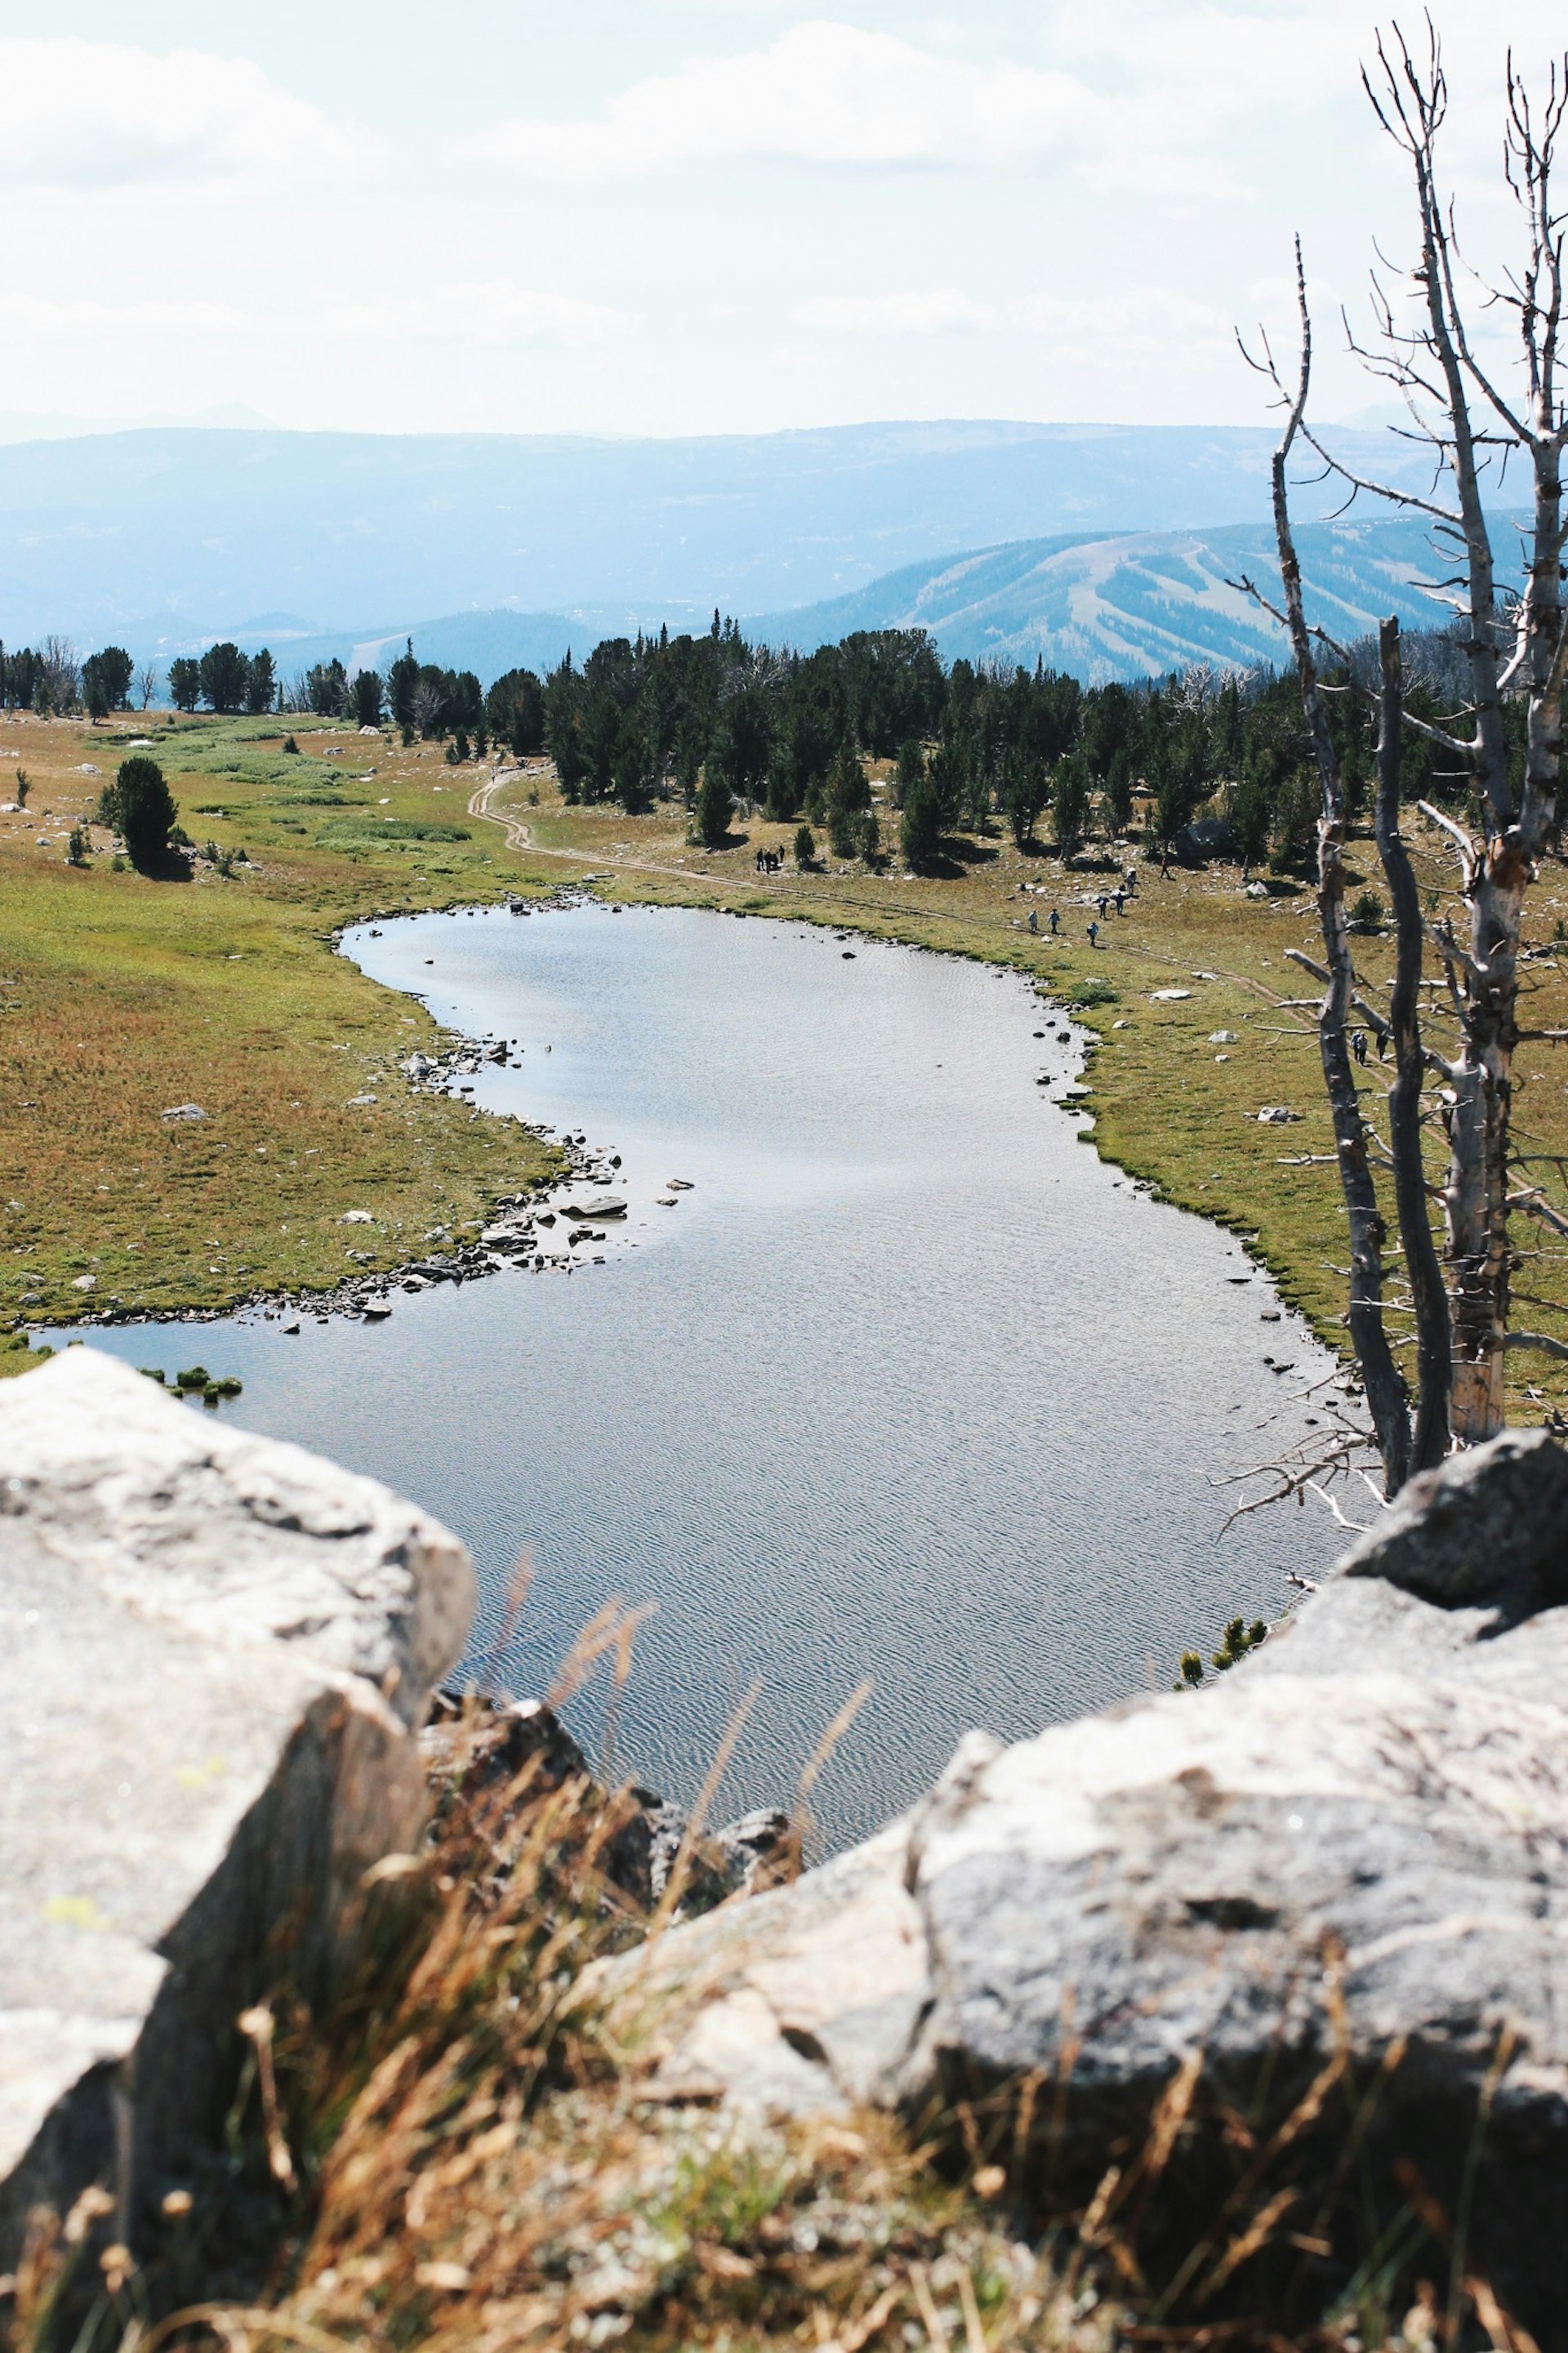 View of Beehive Basin in Big Sky, Montana near Bozeman